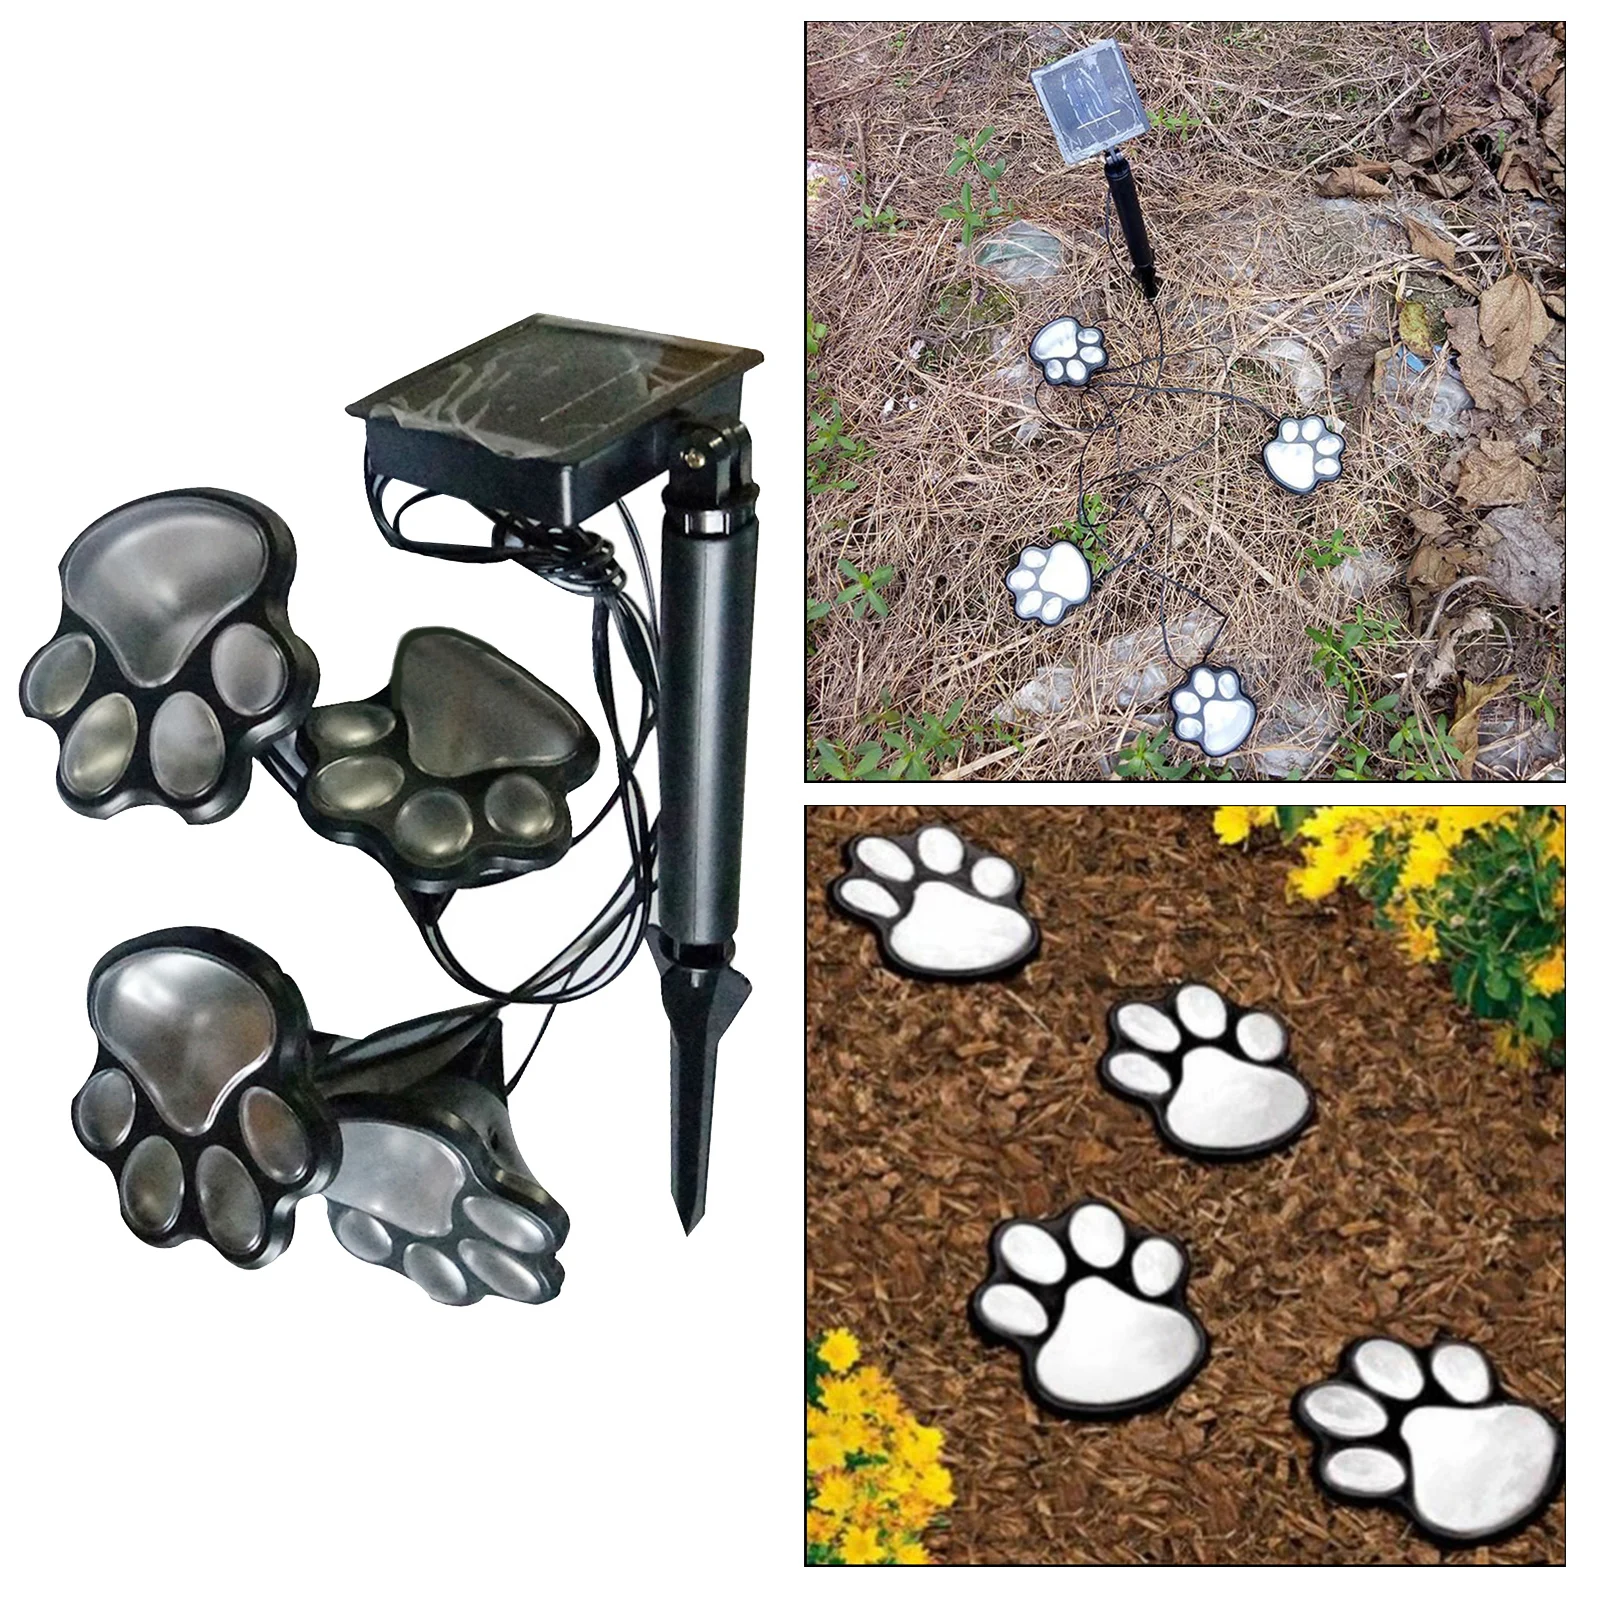 4 Solar Cat Animal Paw Print Lights LED Solar Lamps Garden Outdoors Lantern LED Path Decorative Lighting Lamp